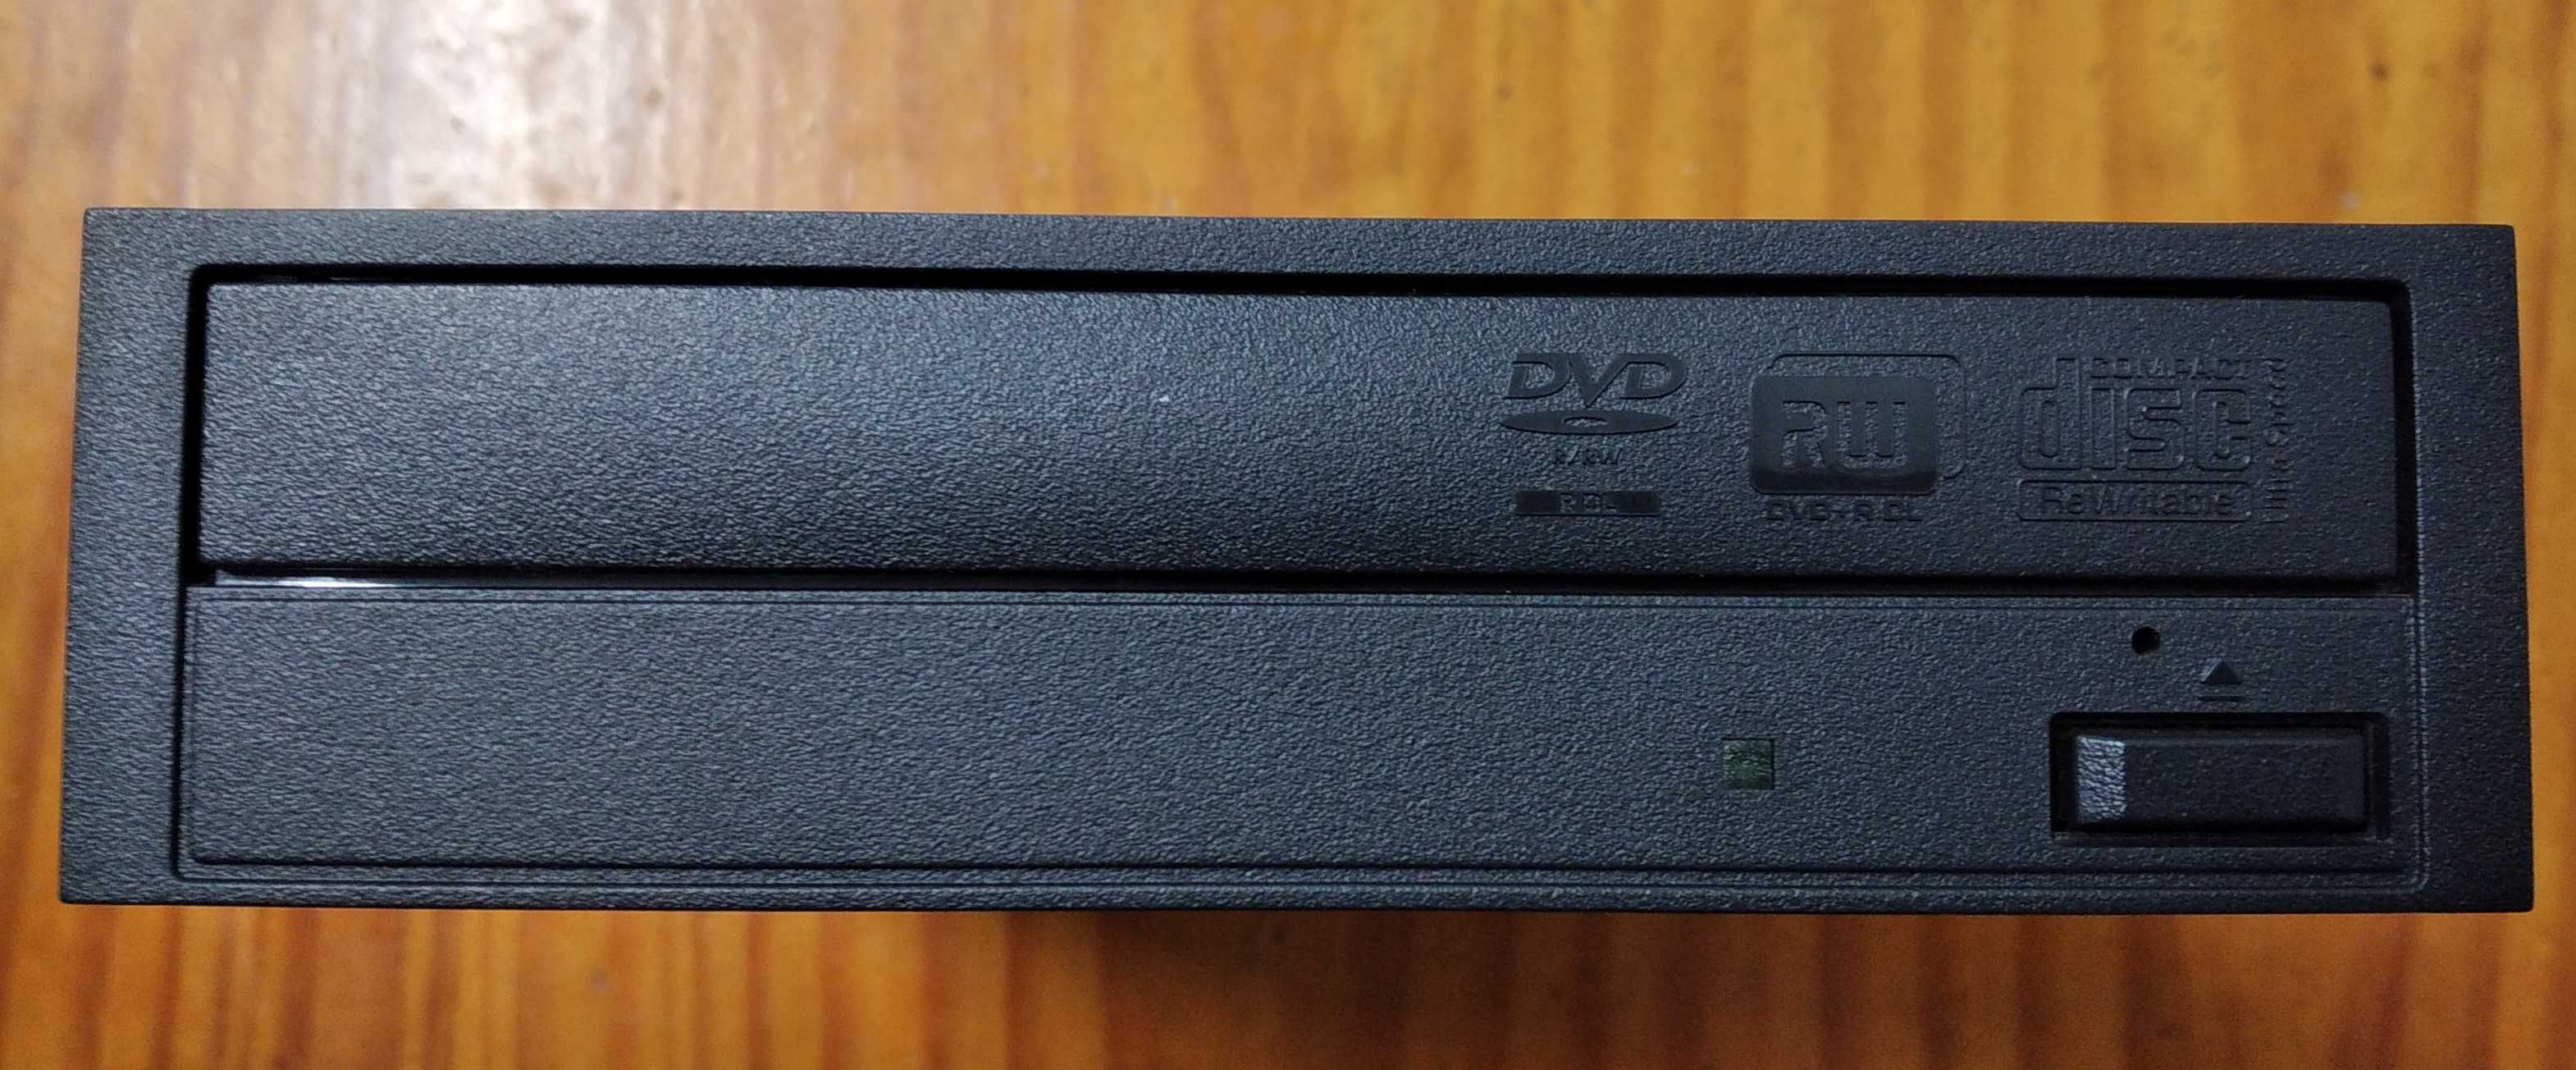 Vendo Leitor/Gravador Sony Optiarc - CD/DVD - Dupla camada